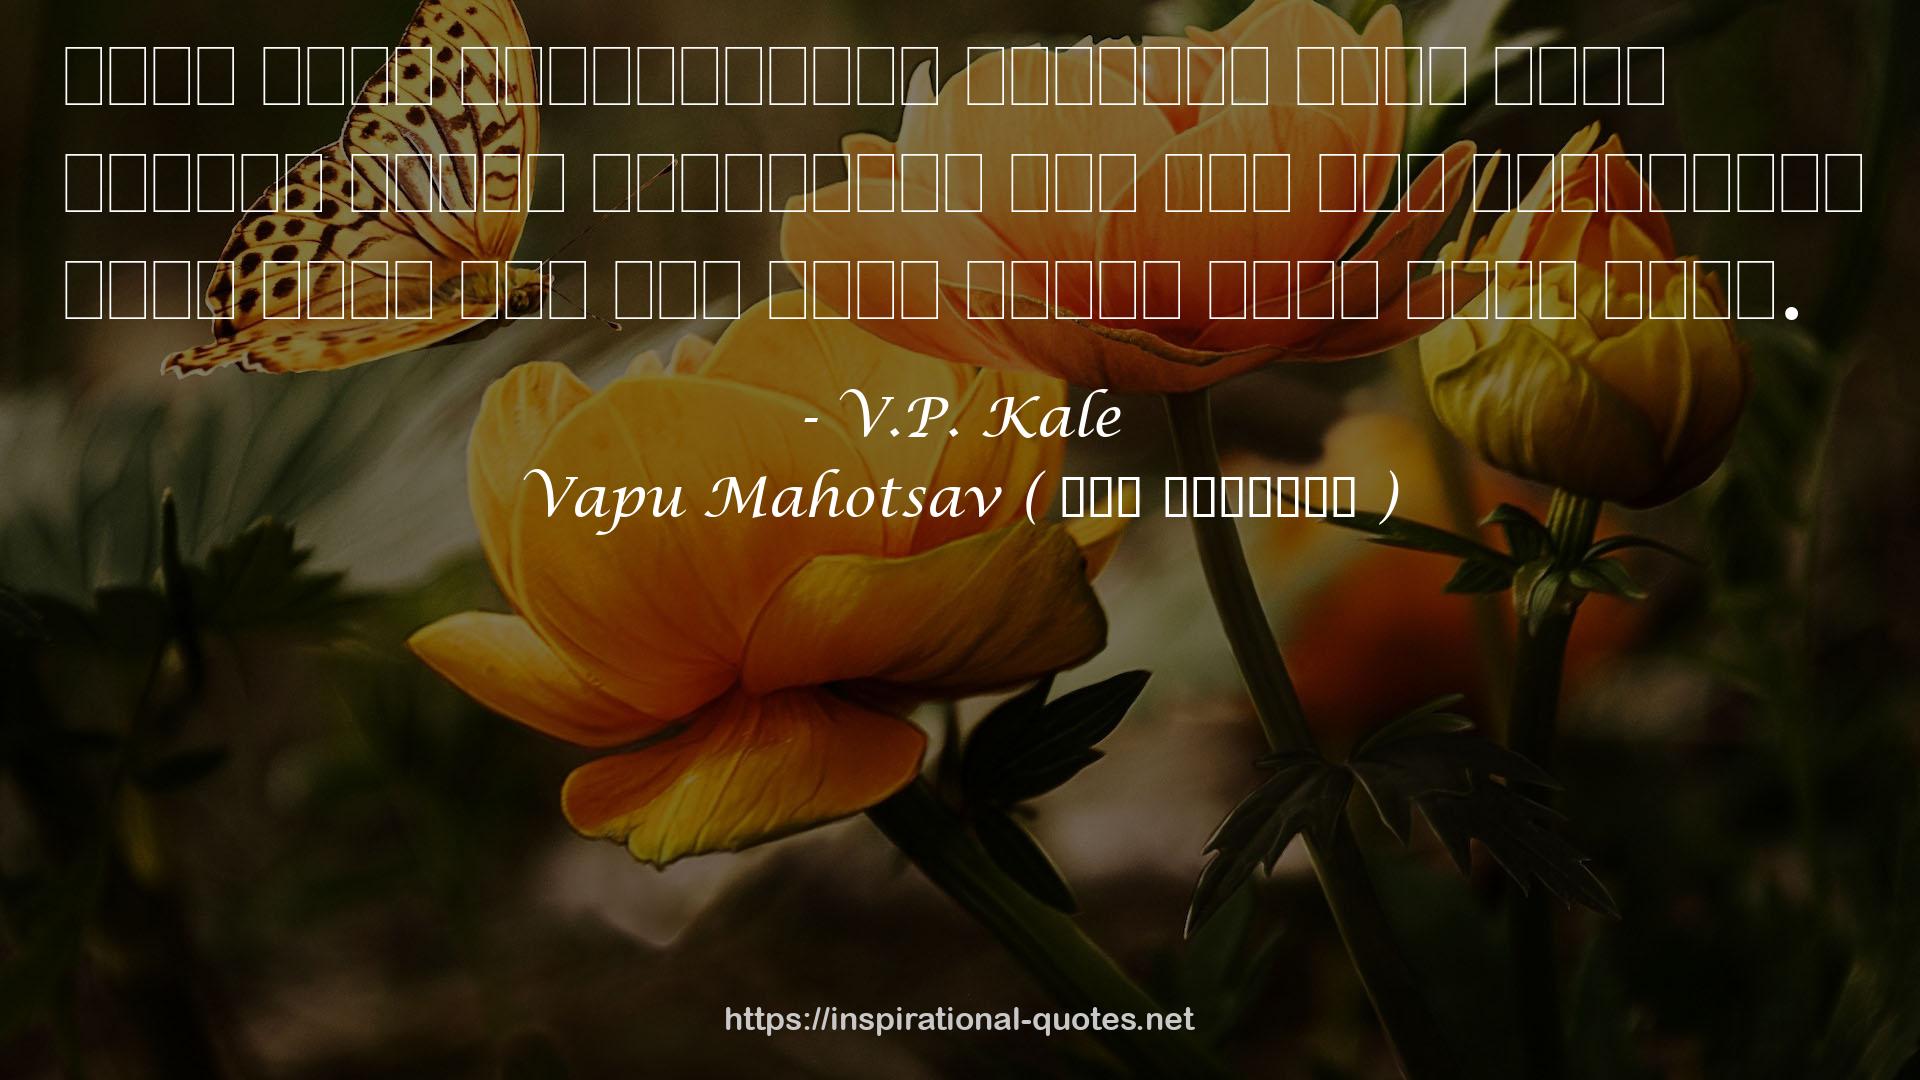 Vapu Mahotsav ( वपु महोत्सव ) QUOTES